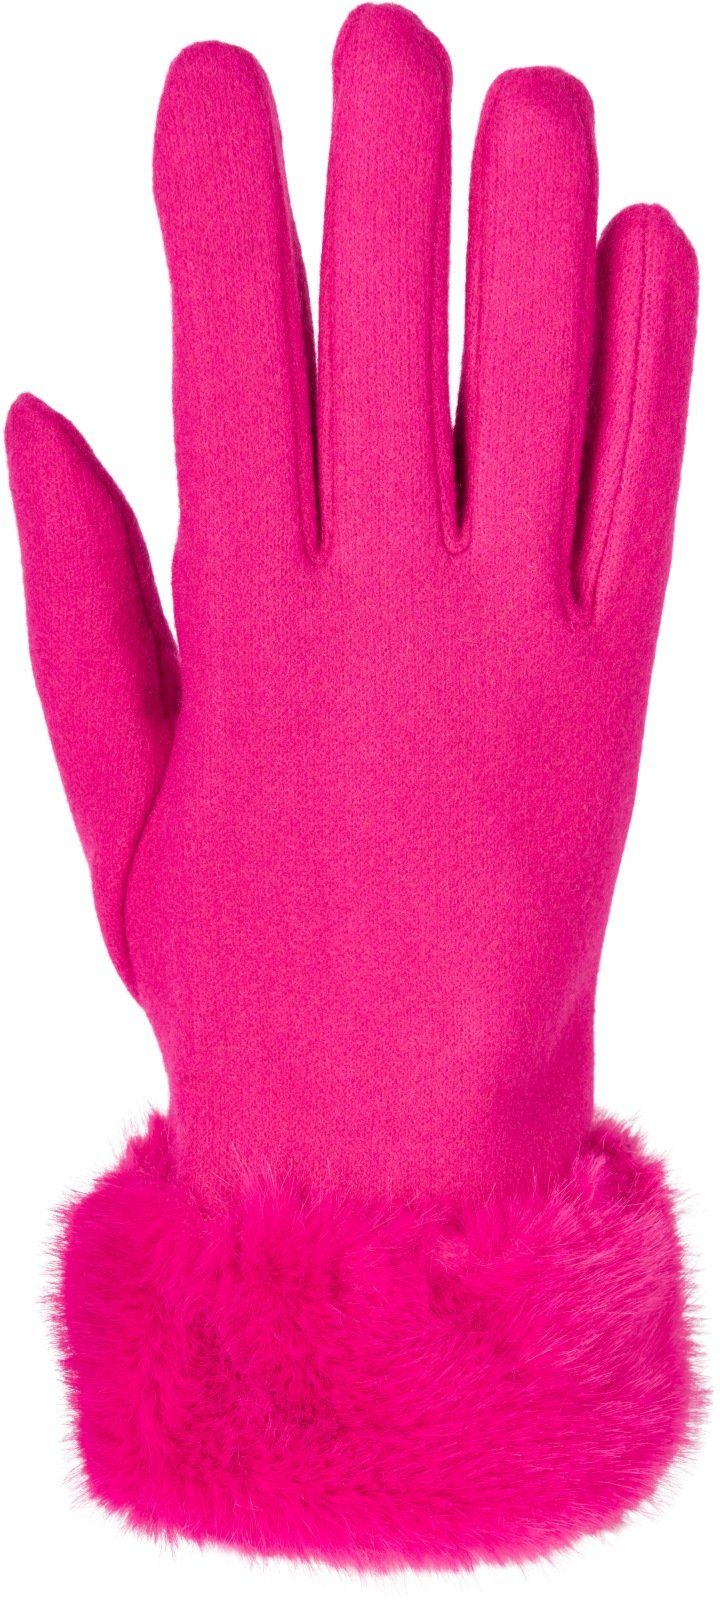 styleBREAKER Fleecehandschuhe Unifarbene Touchscreen Handschuhe Pink Kunstfell mit